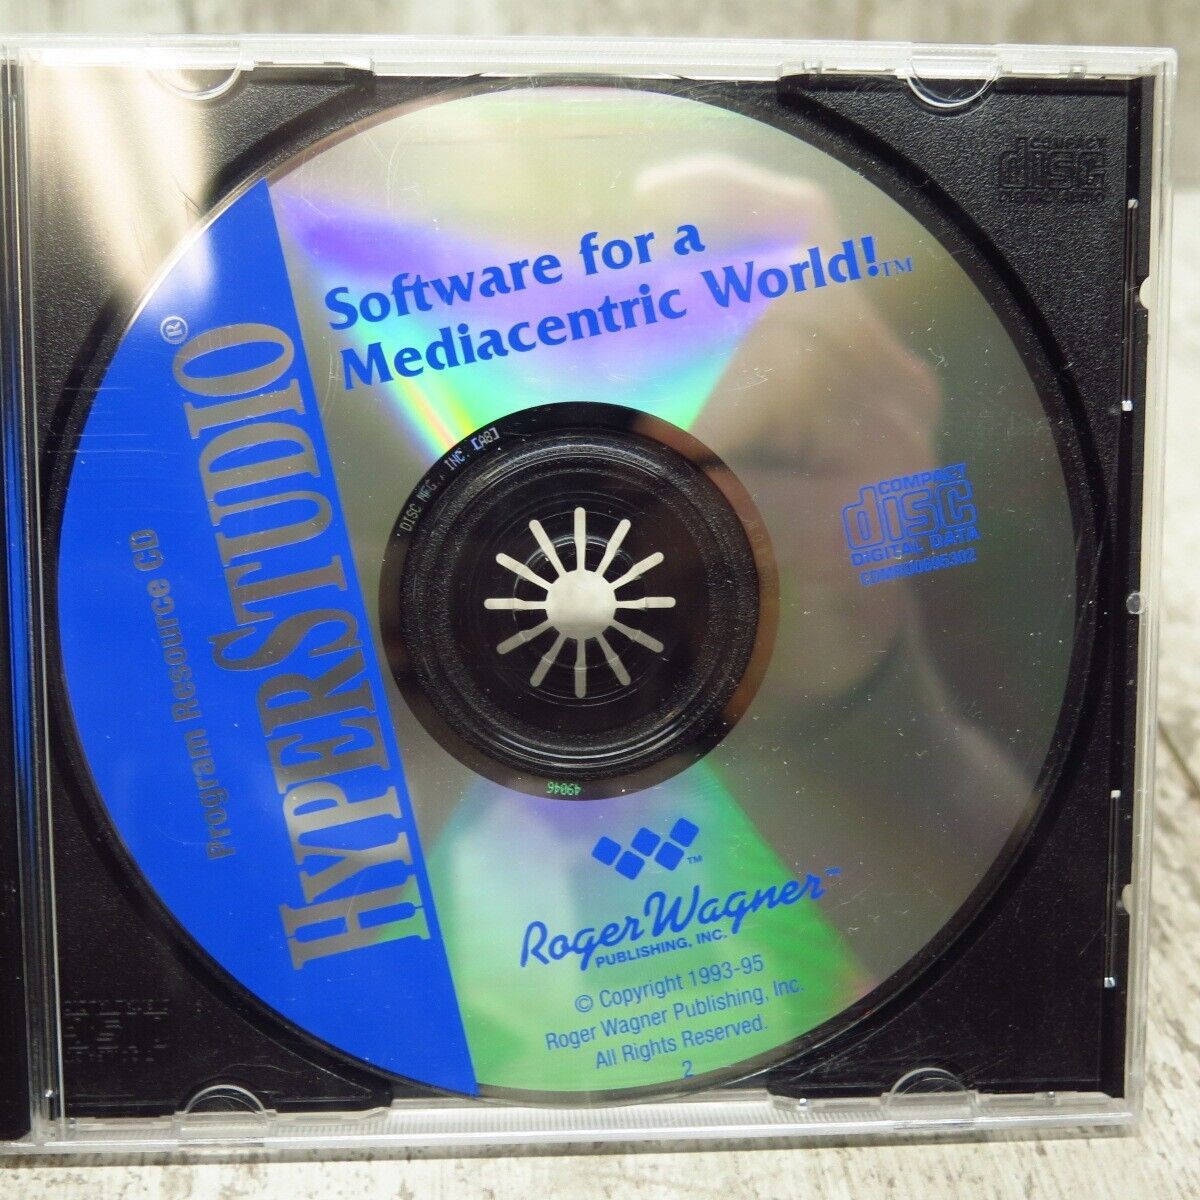 Vintage 1995 Roger Wagner Hyperstudio Resource Software for Mac OS CD Rom Disc